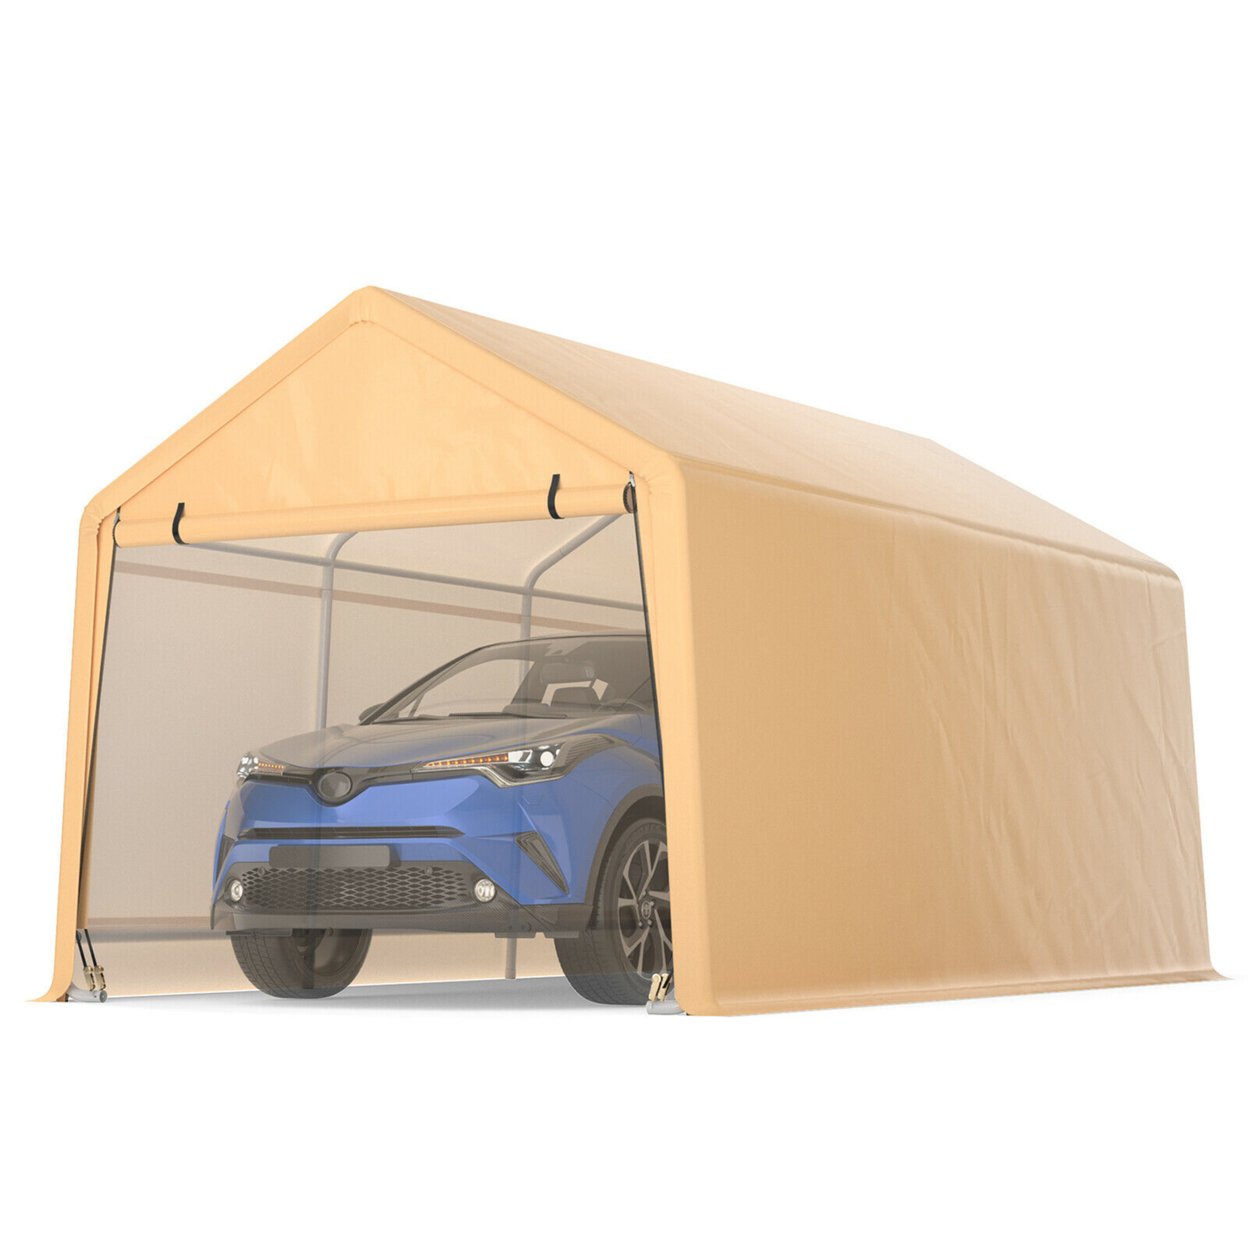 9x17 Ft Heavy Duty Carport Canopy PE Car Tent Steel Outdoor Garage Shelter